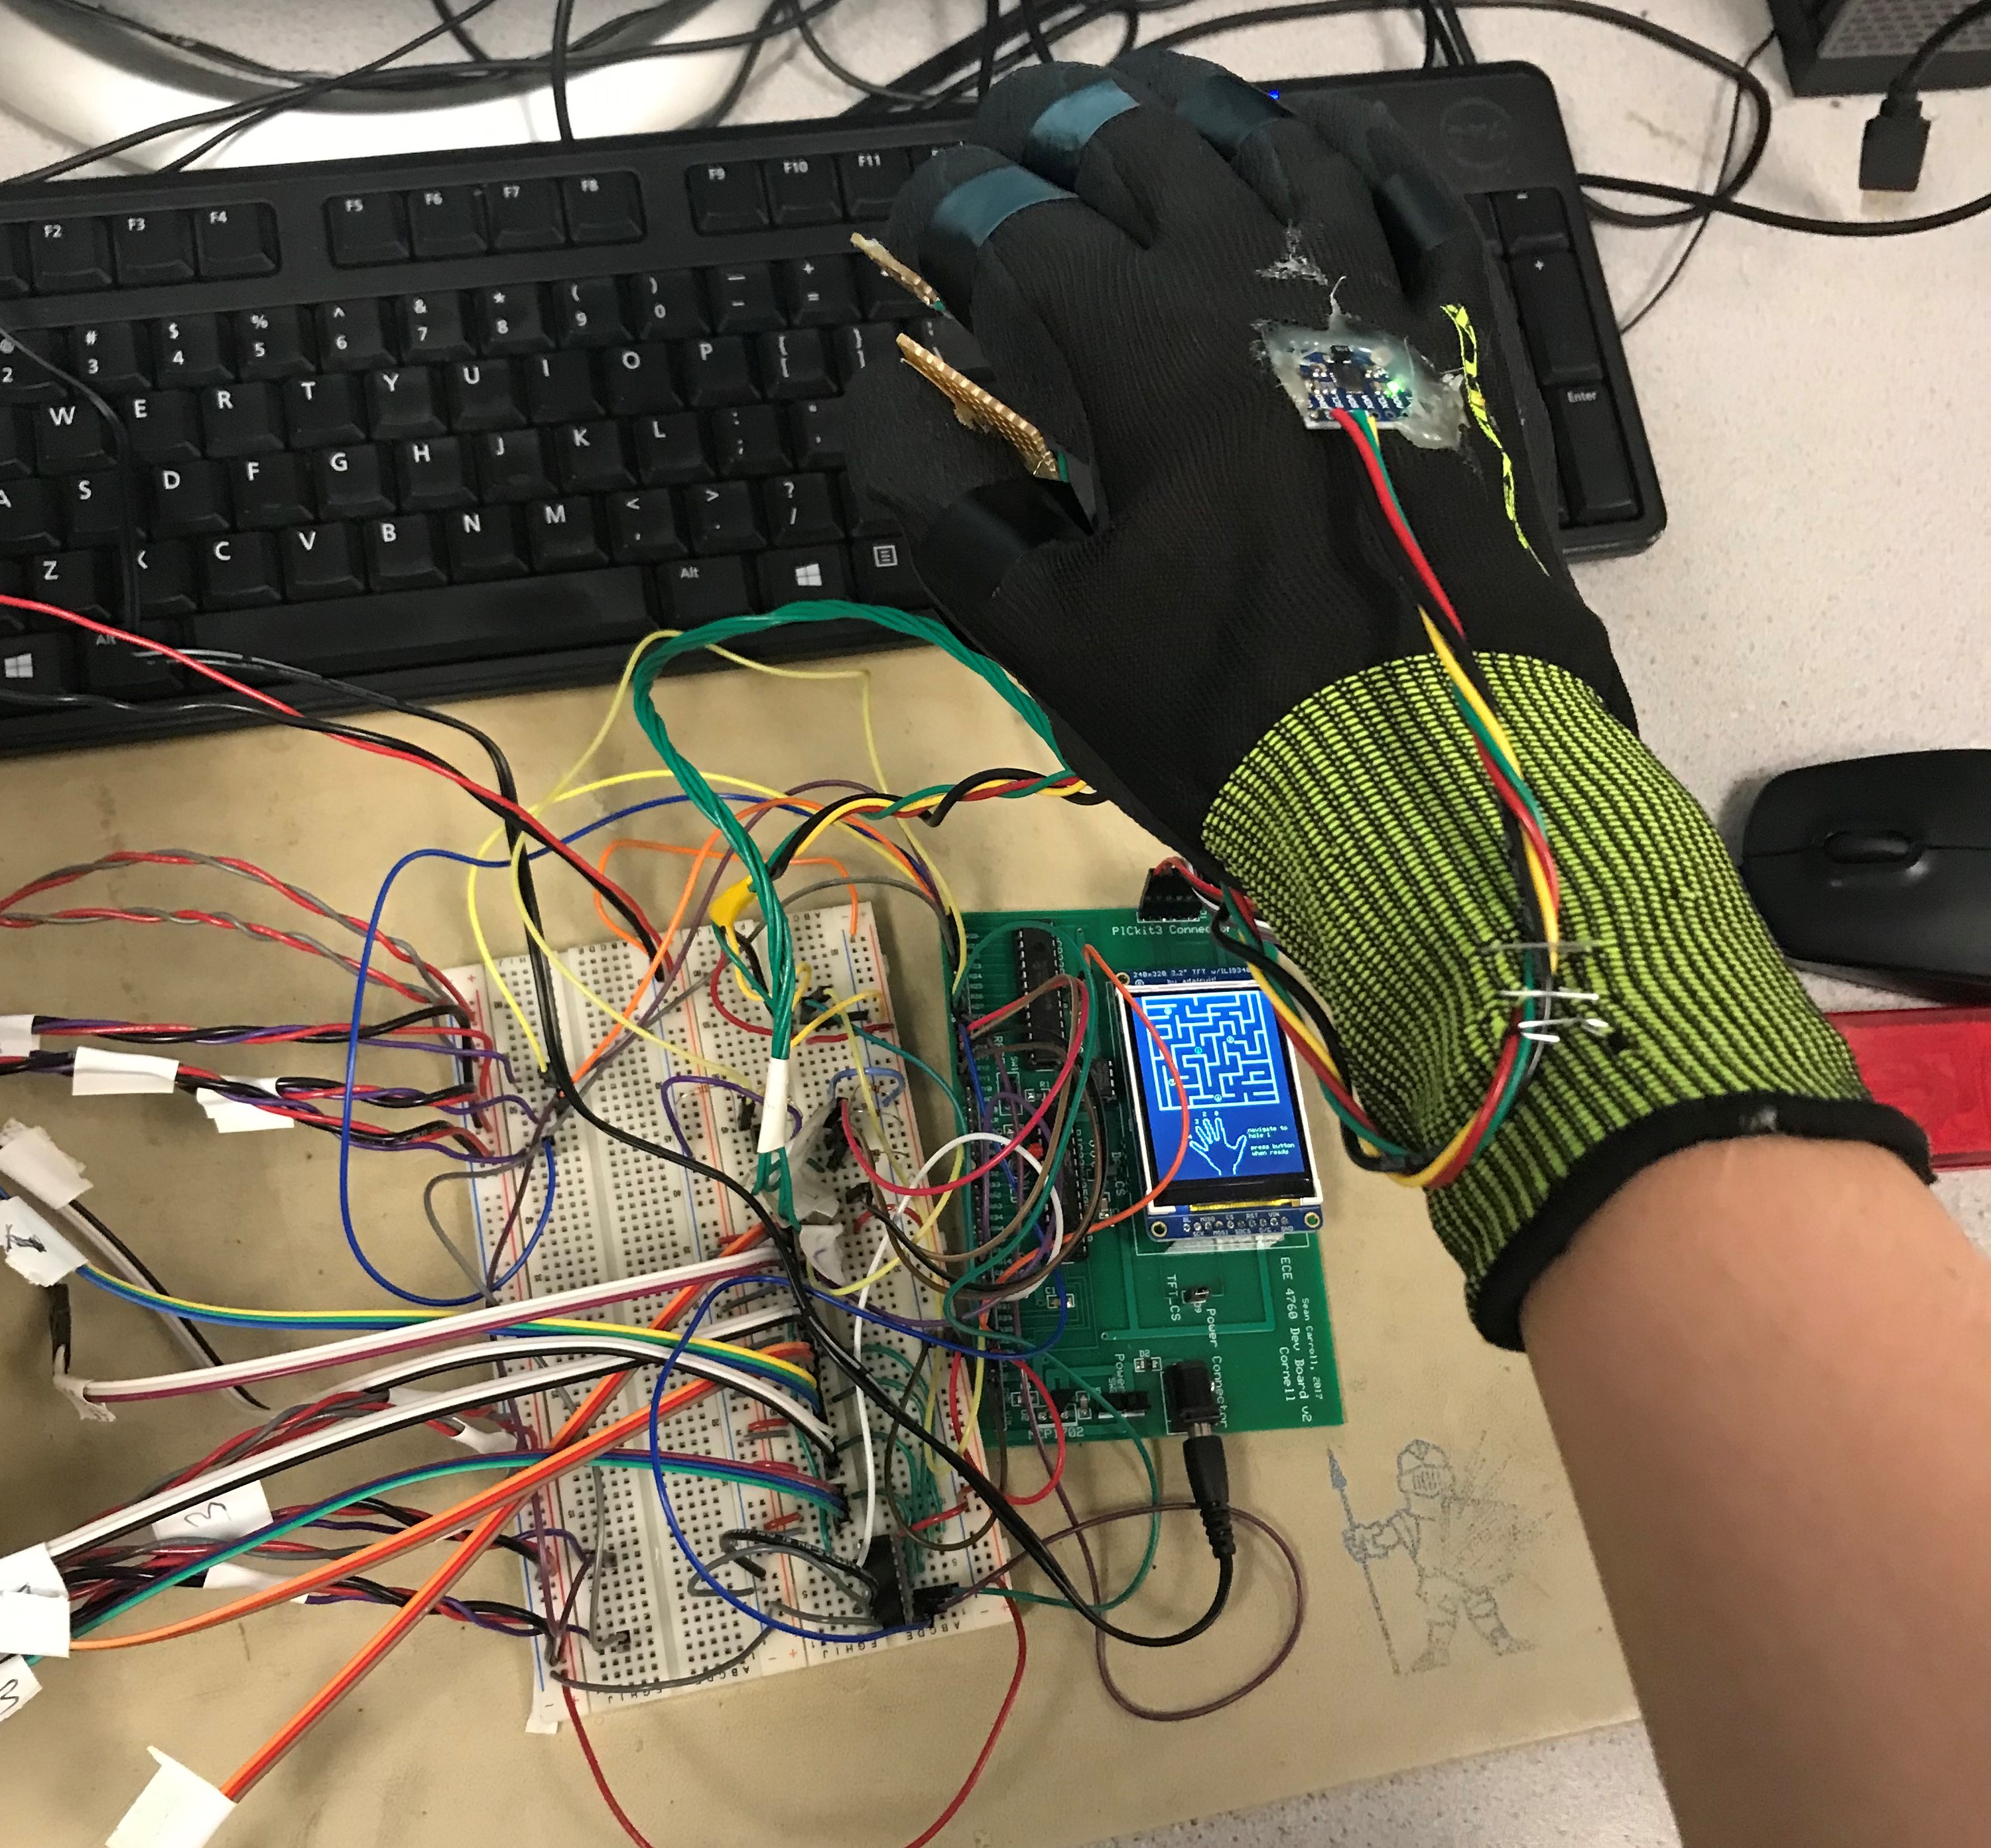 Accelerometer on glove